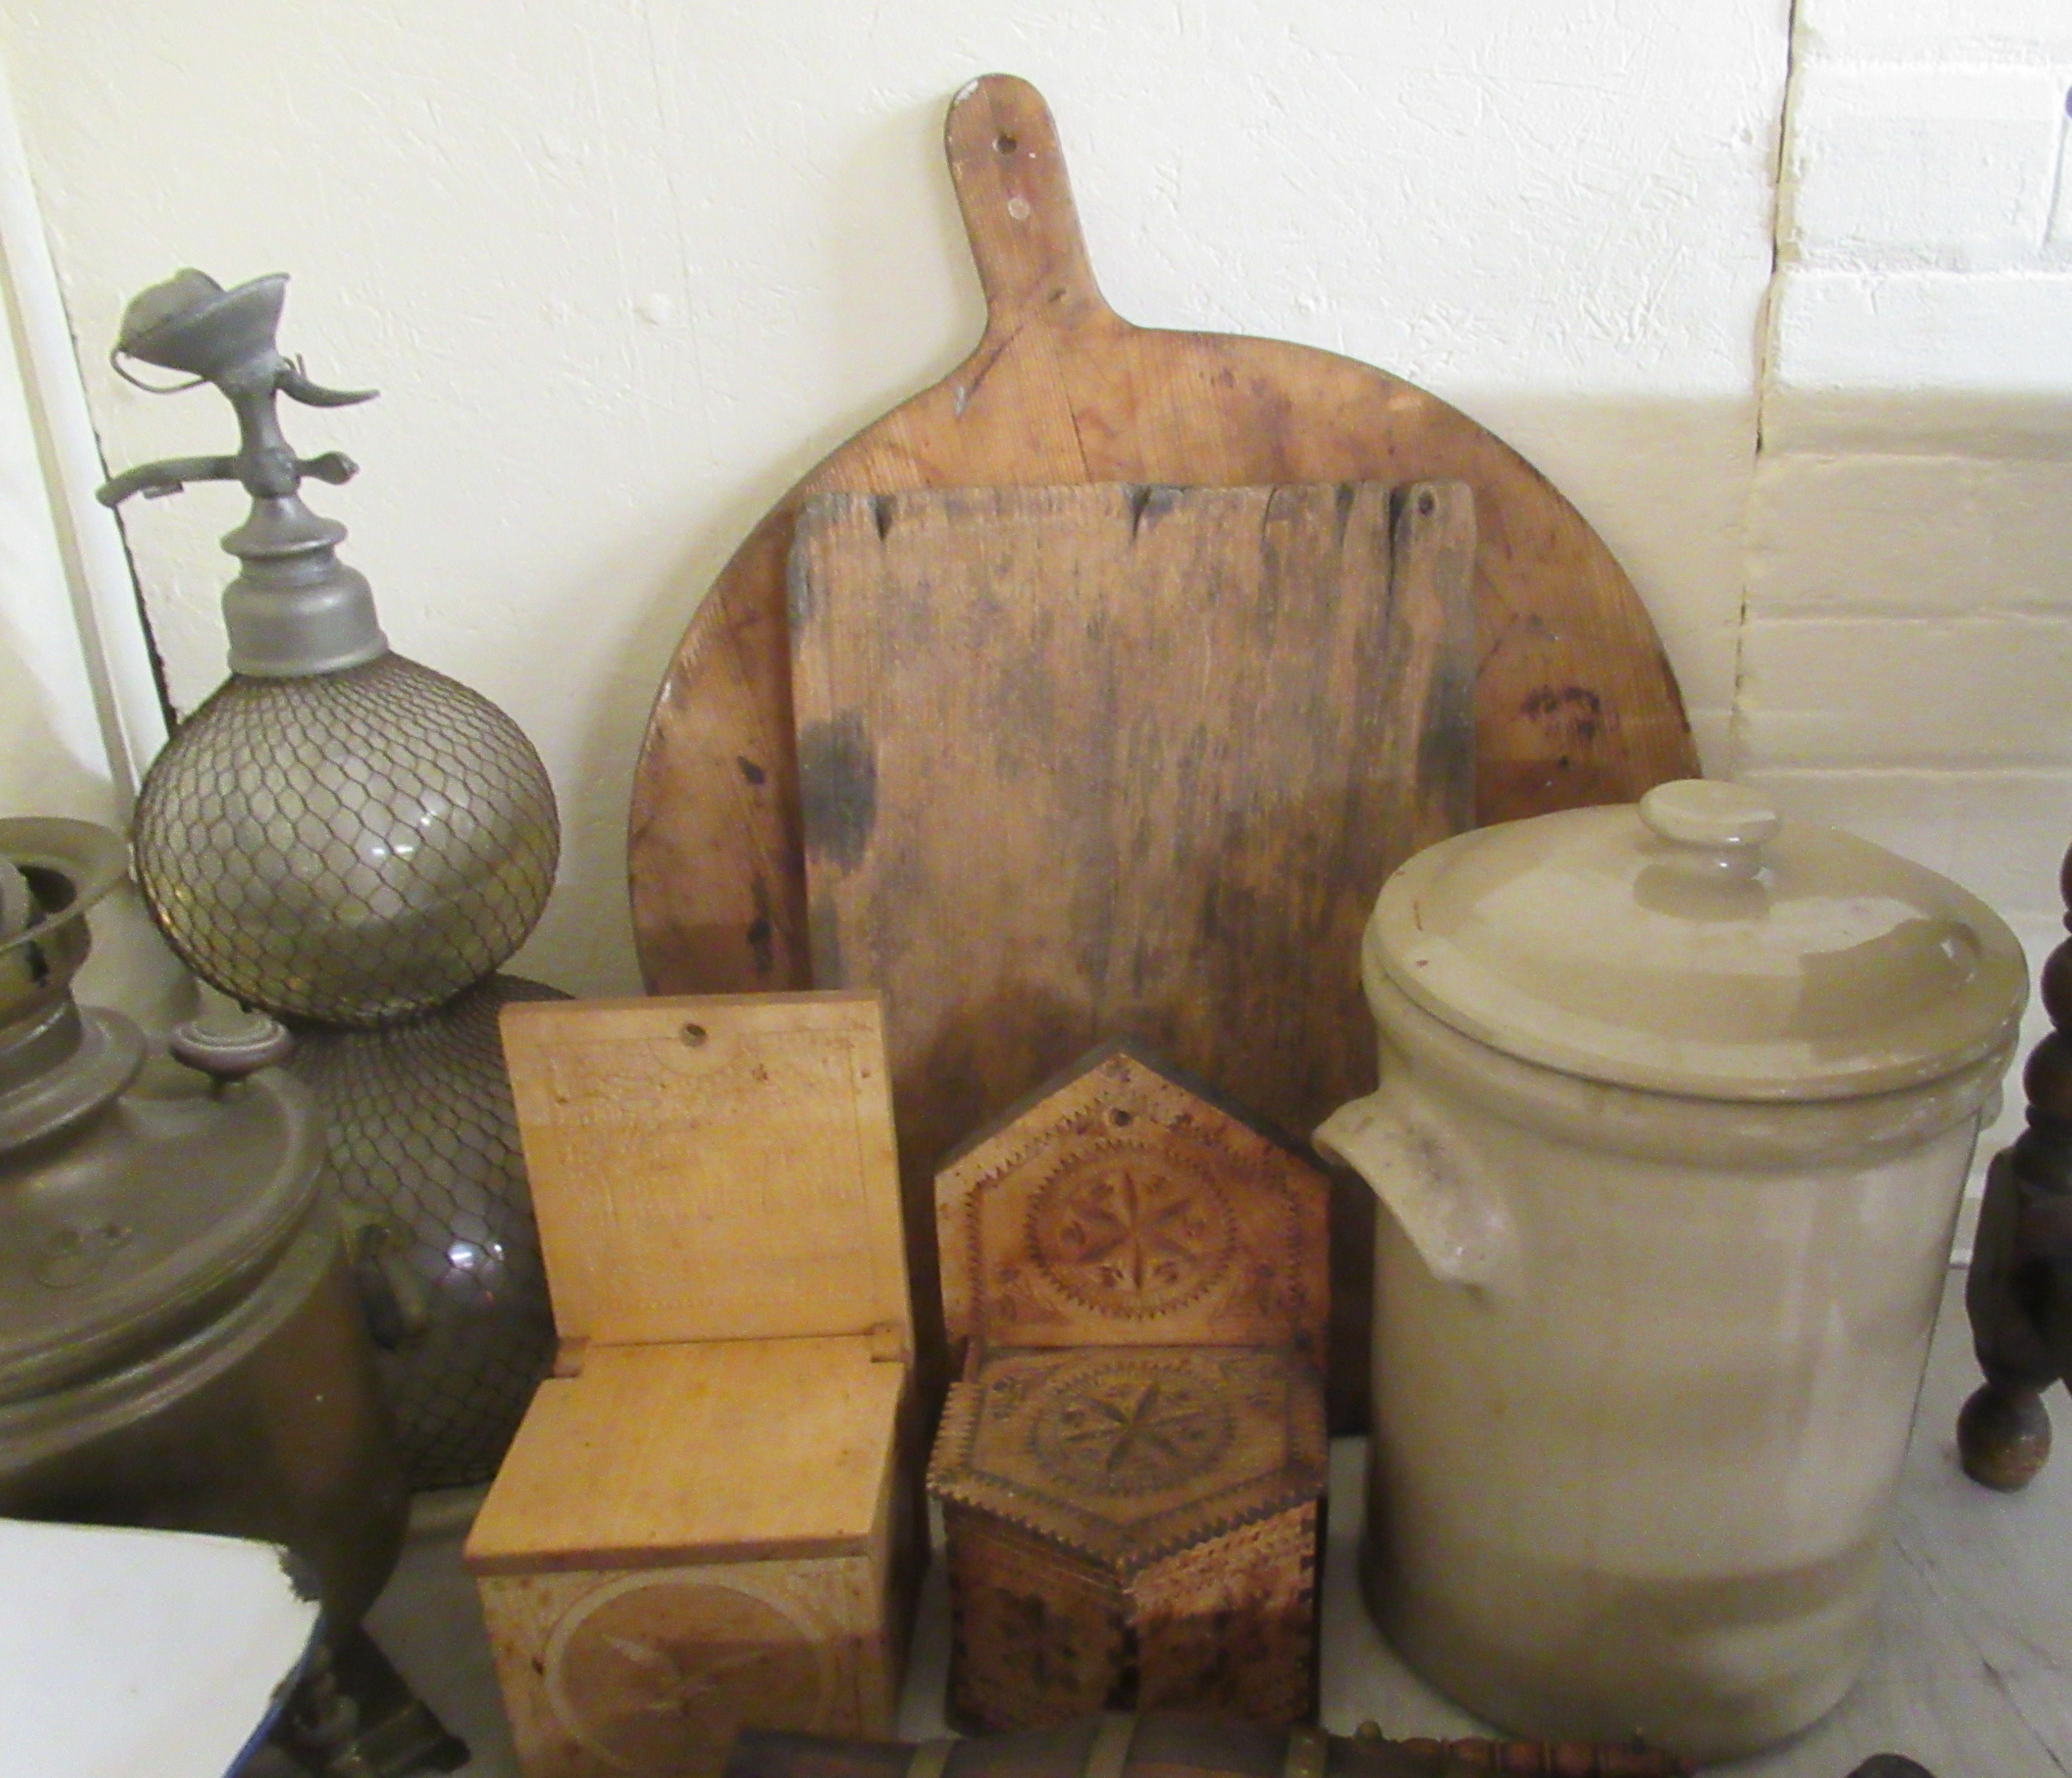 Wooden implements and vintage kitchen bygones - Image 7 of 7